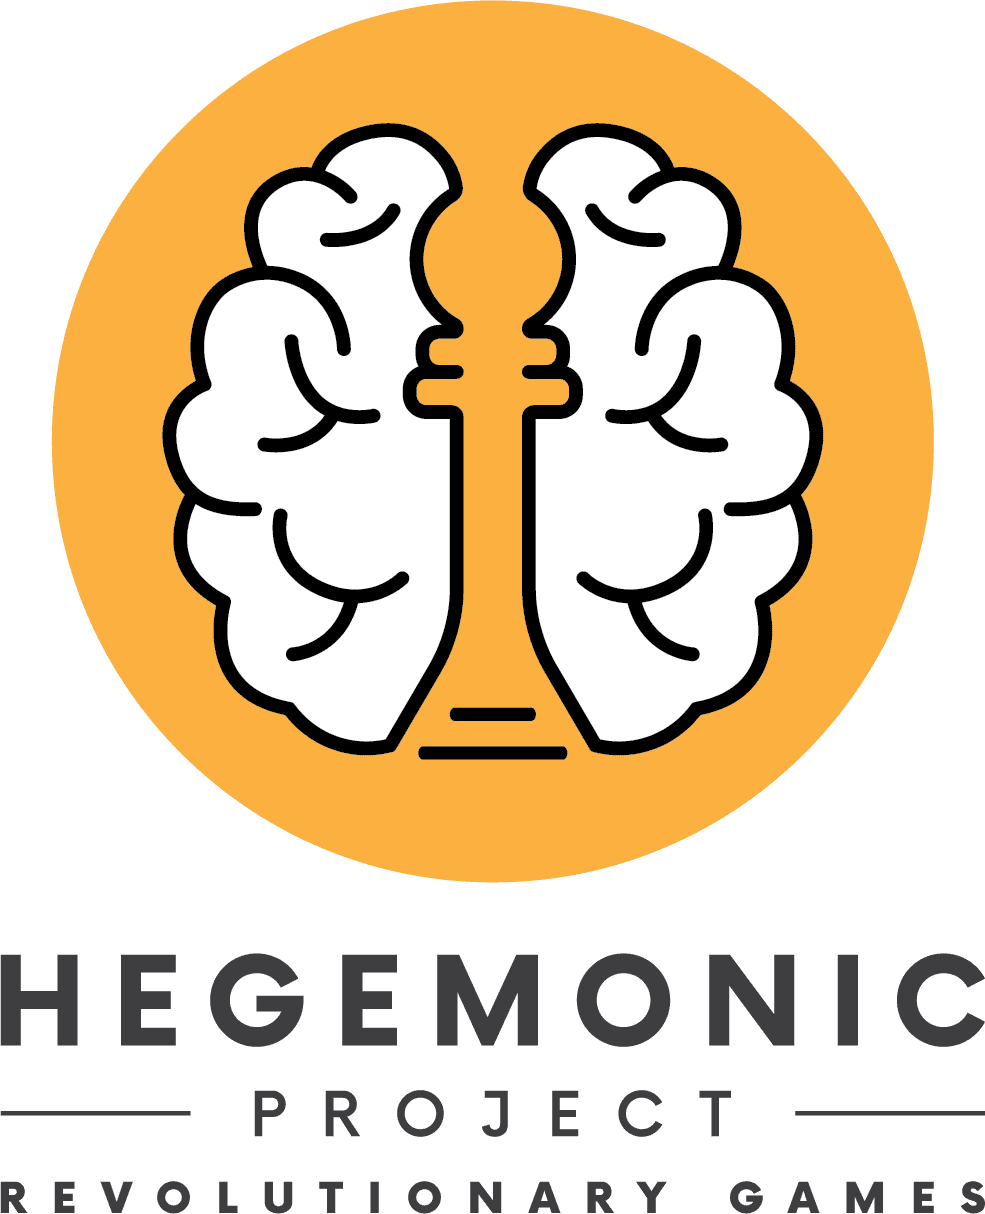 Hegemonic Project Limited